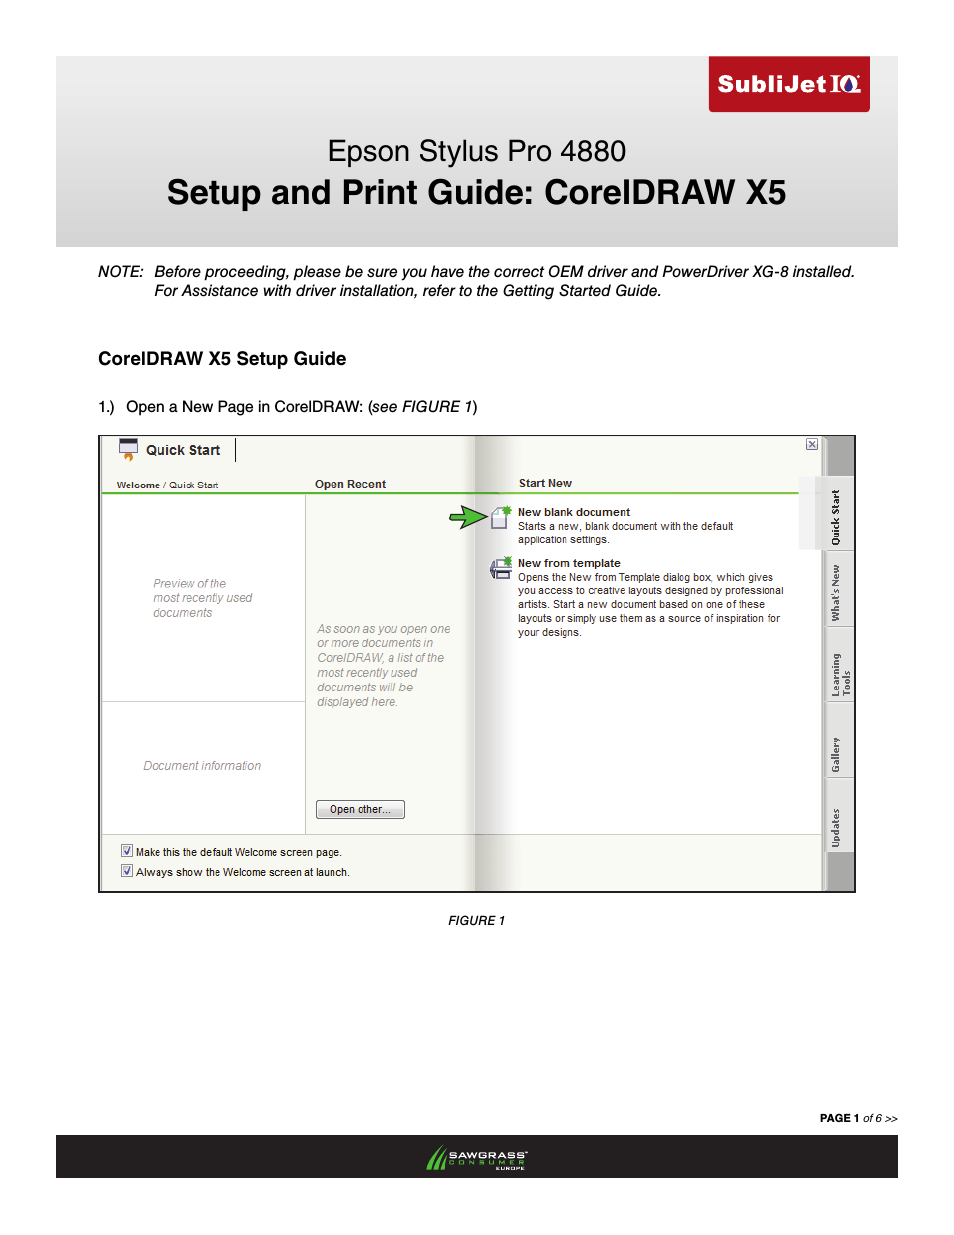 SubliJet IQ EPSON Stylus PRO 4880 (Windows Power Driver Setup): Print & Setup Guide CorelDRAW X5